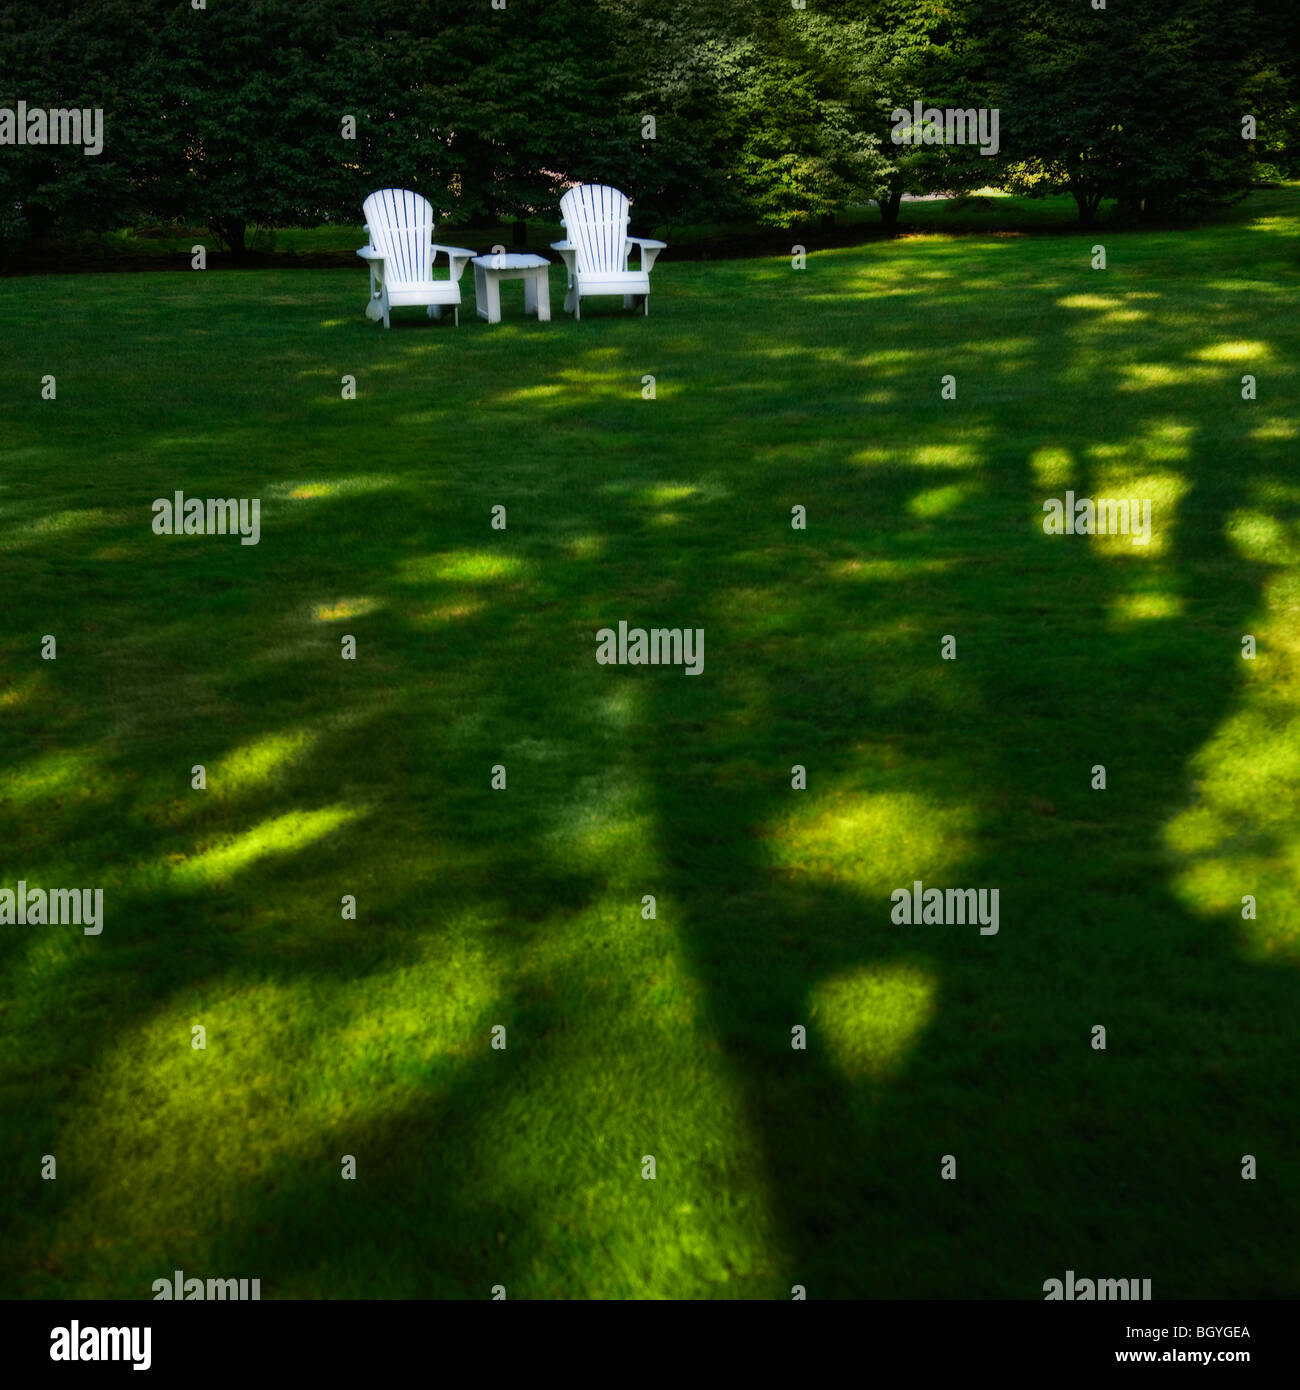 Adirondack chairs on lawn Stock Photo